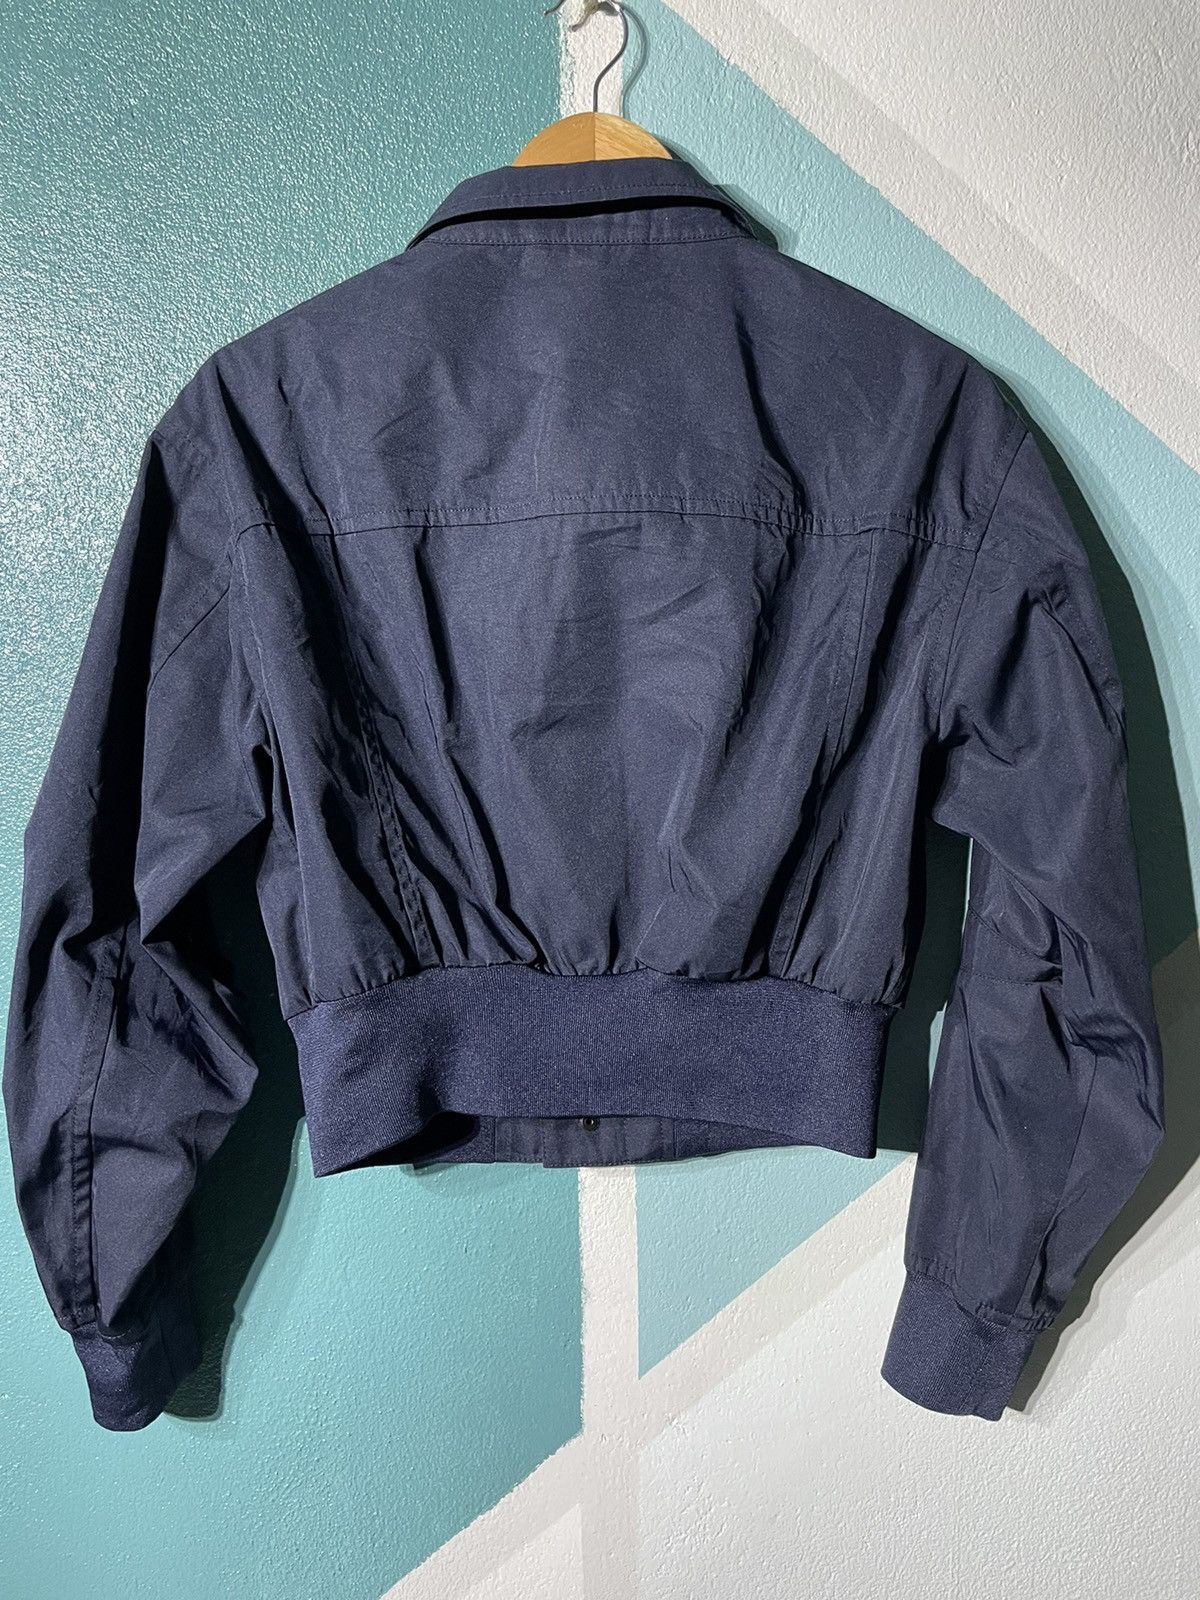 DELETE IN 24h‼️ Adidas Y-3 cropped jacket - 2